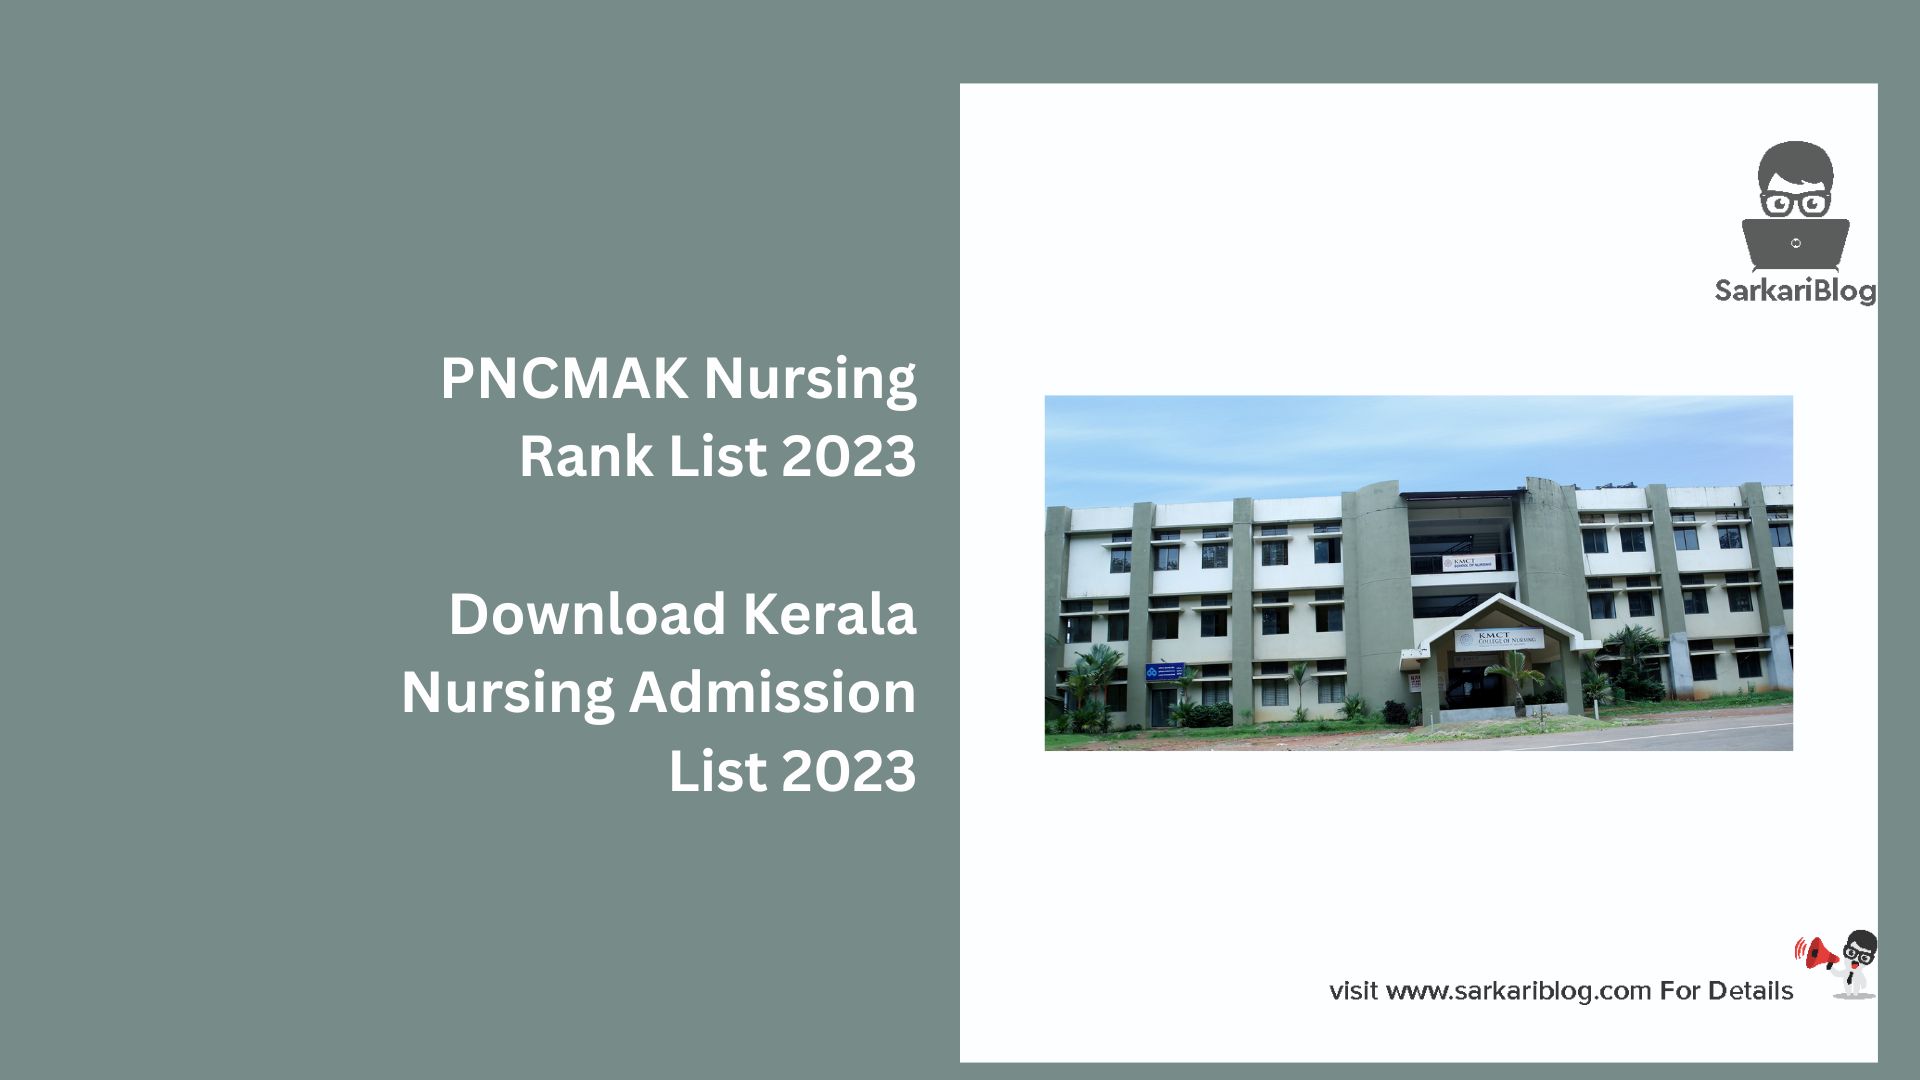 PNCMAK Nursing Rank List 2023